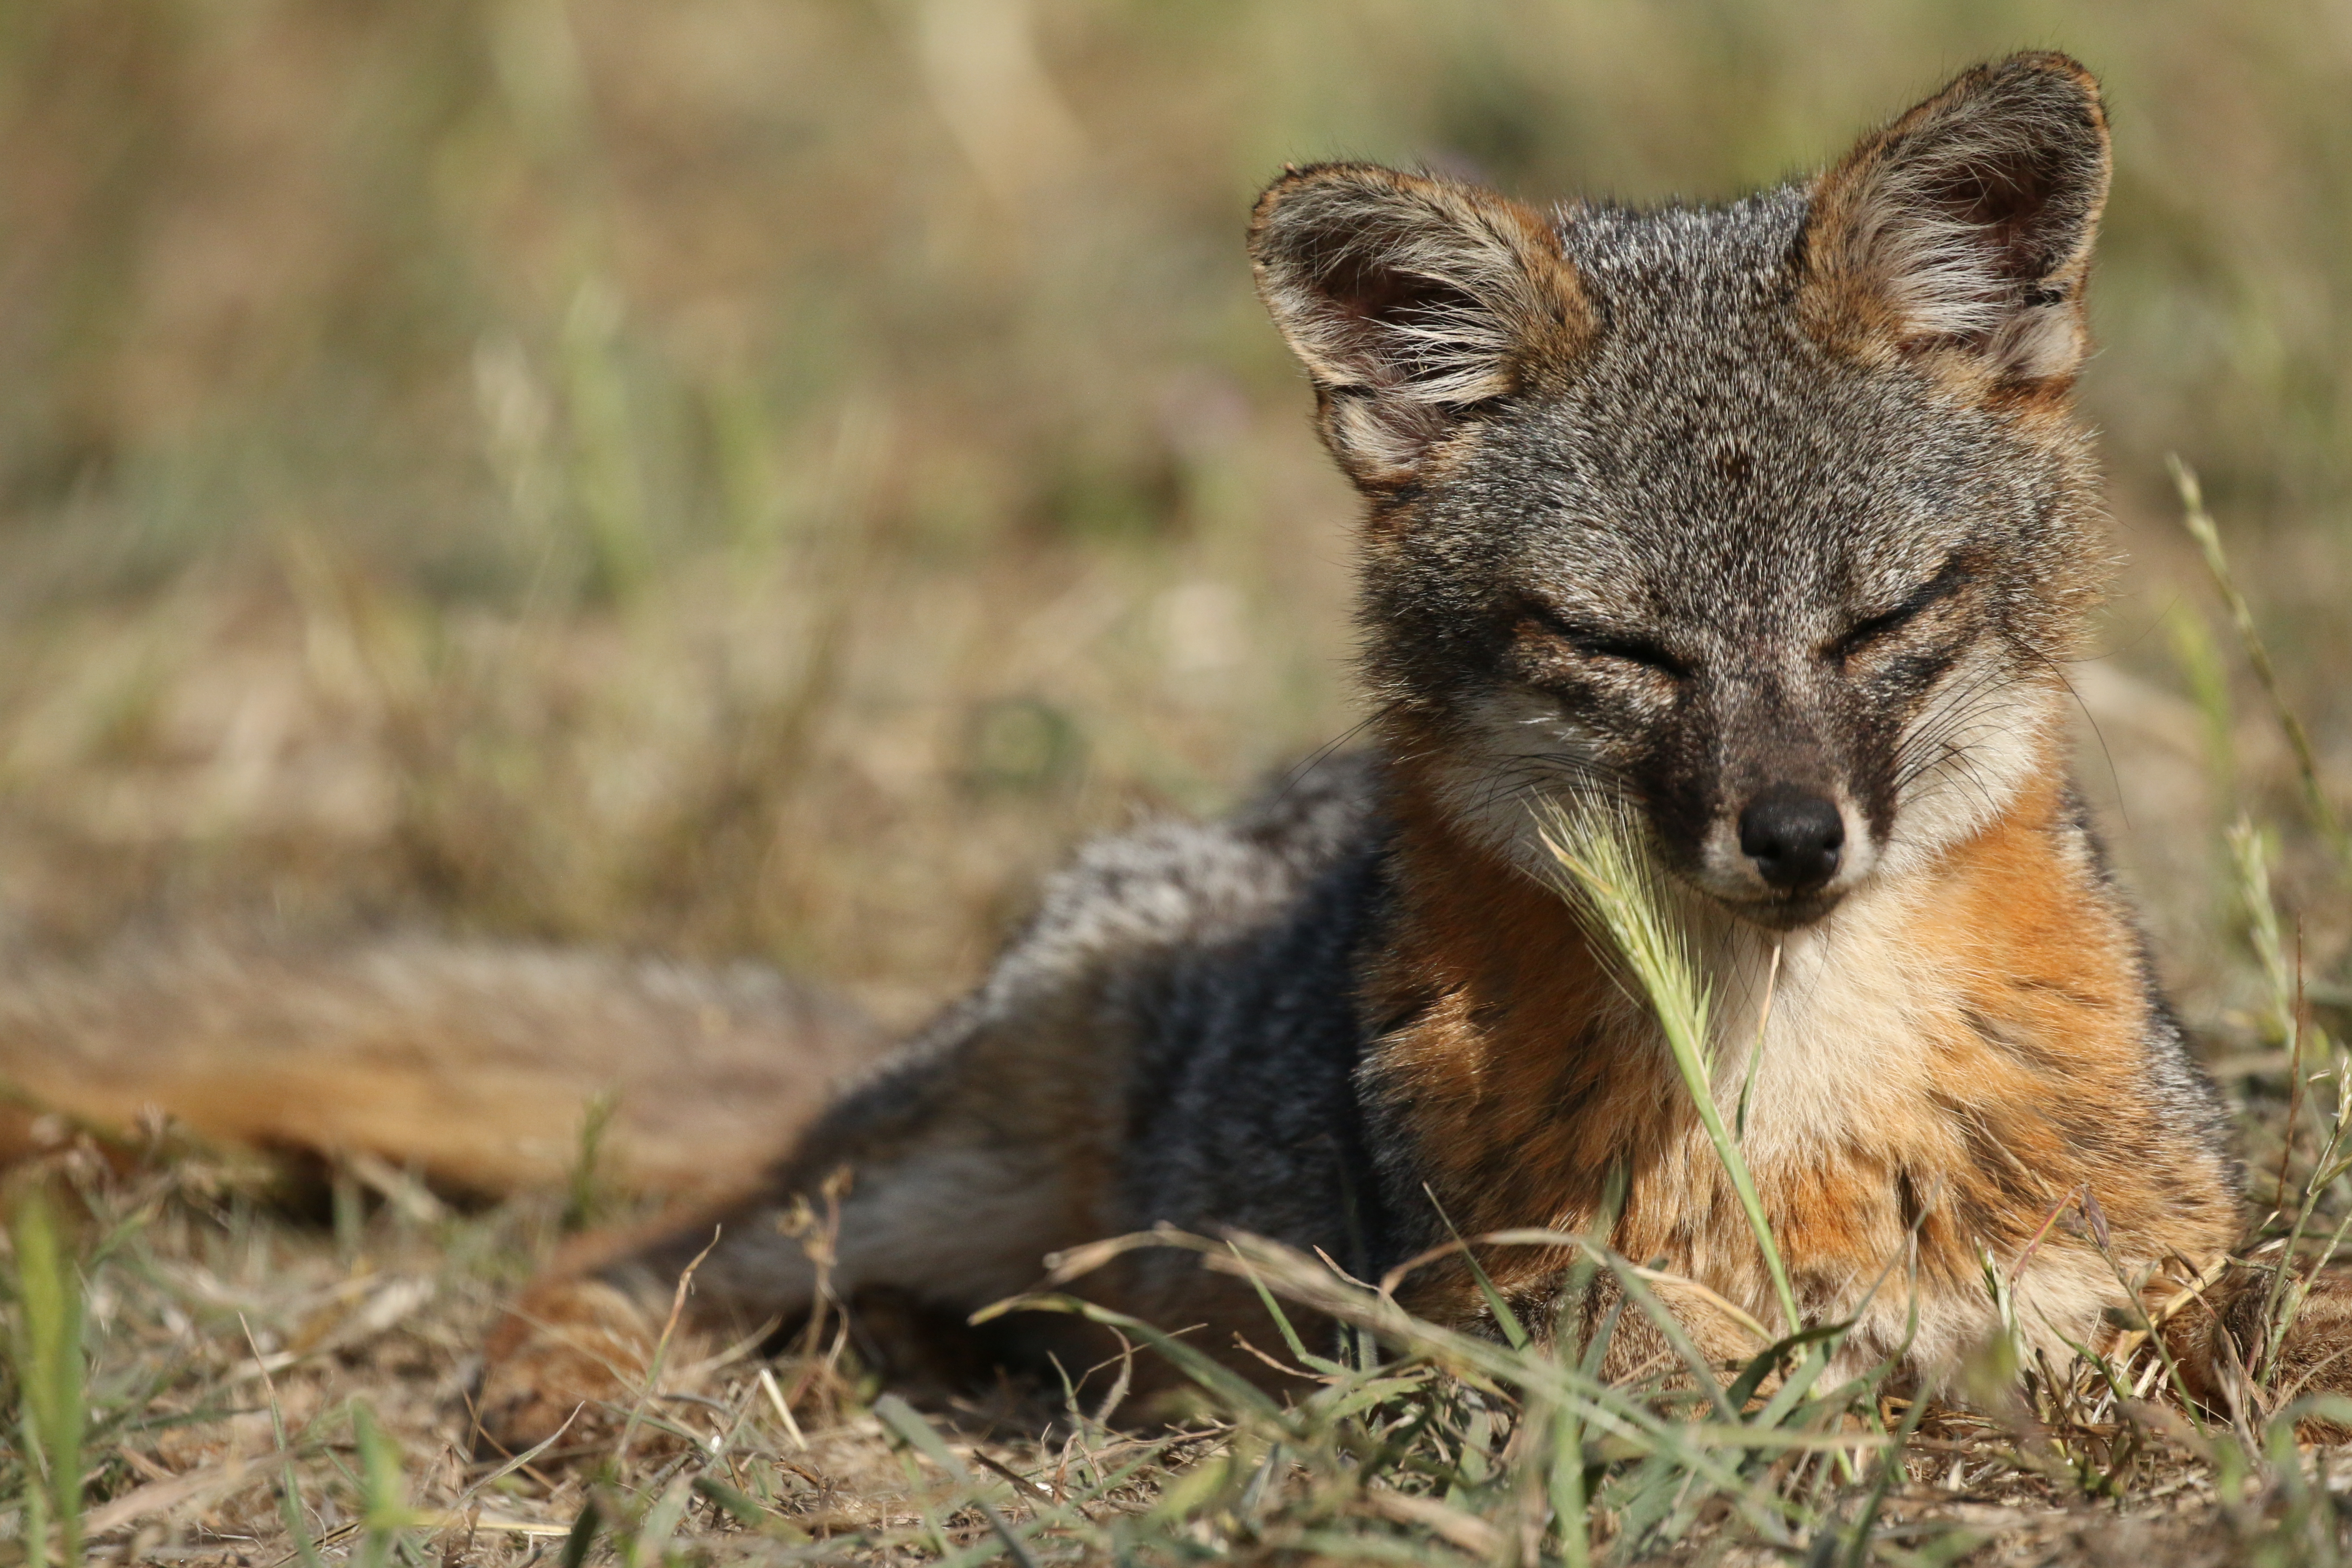 A Santa Cruz island fox. Credit: The Nature Conservancy